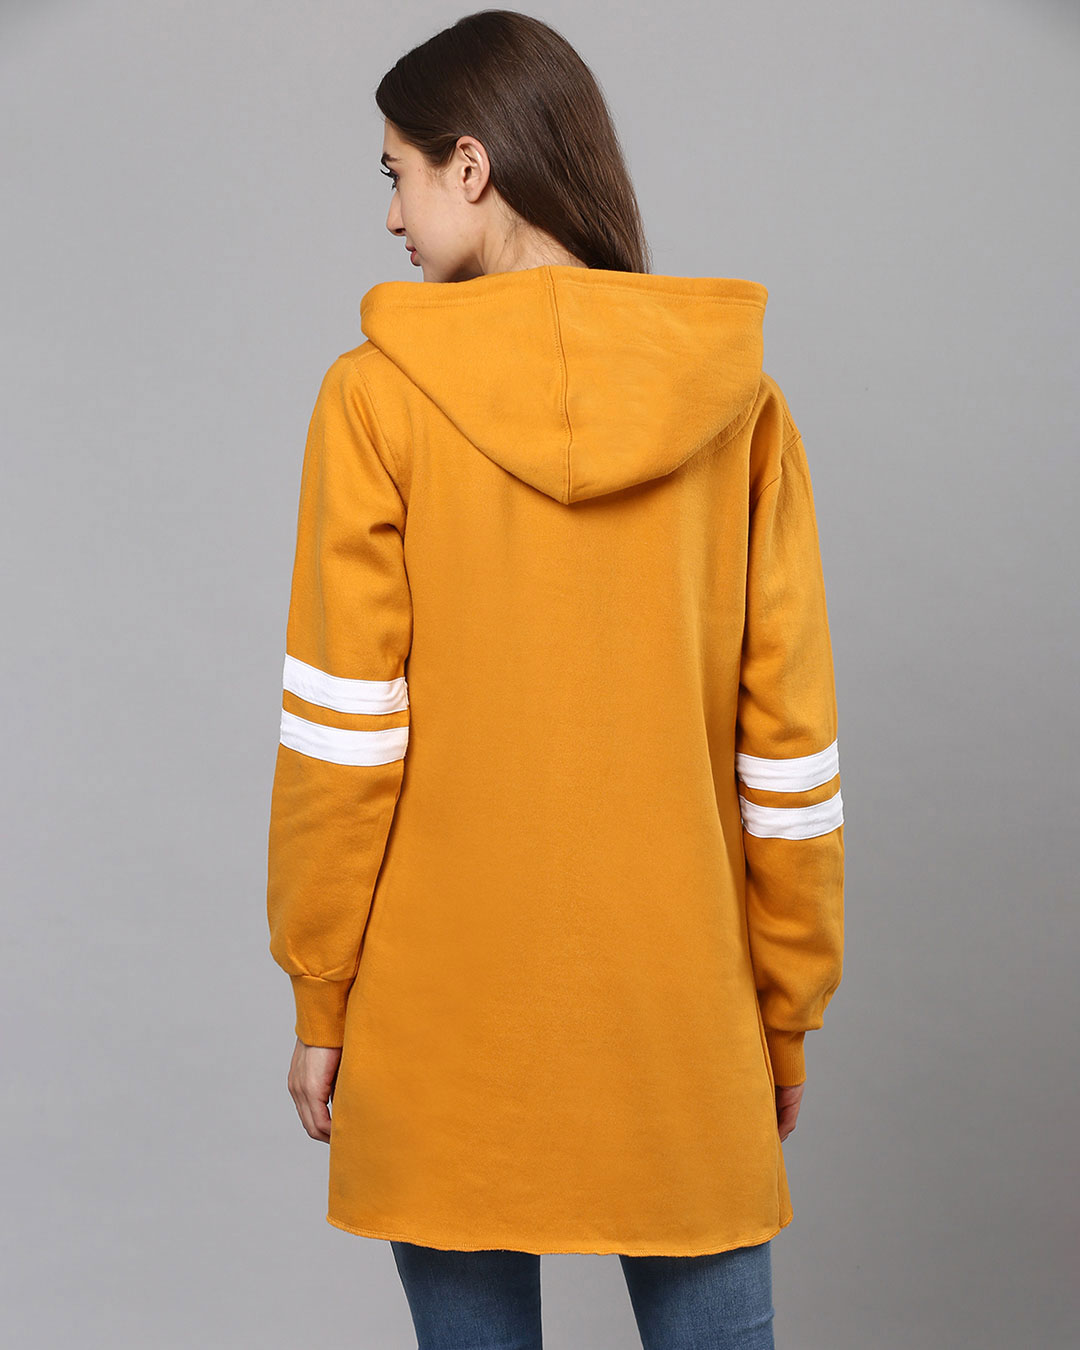 Shop Women's Yellow Solid Stylish A Line Casual Winter Sweatshirt-Back